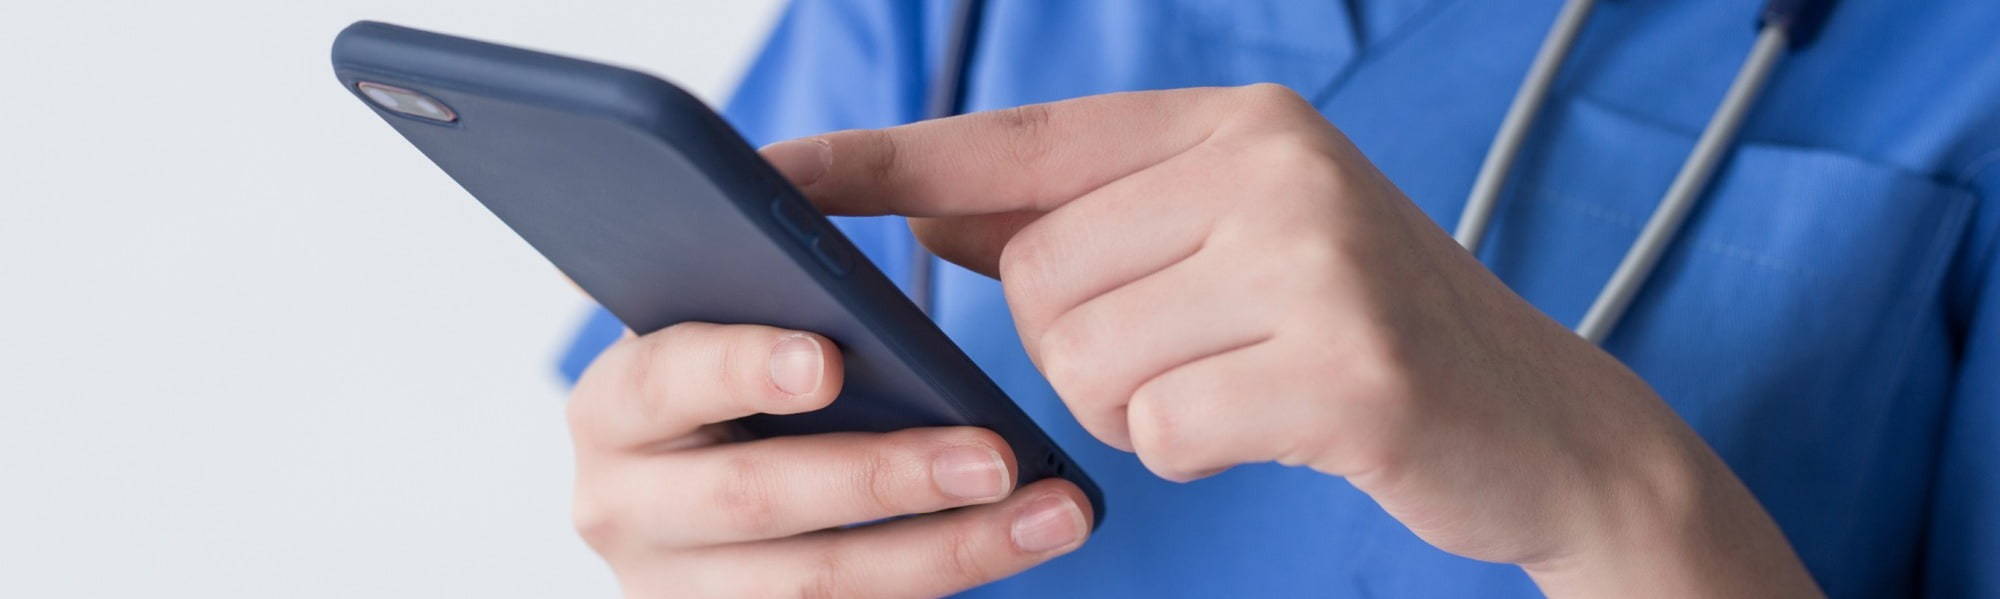 nurse texting mobile phone